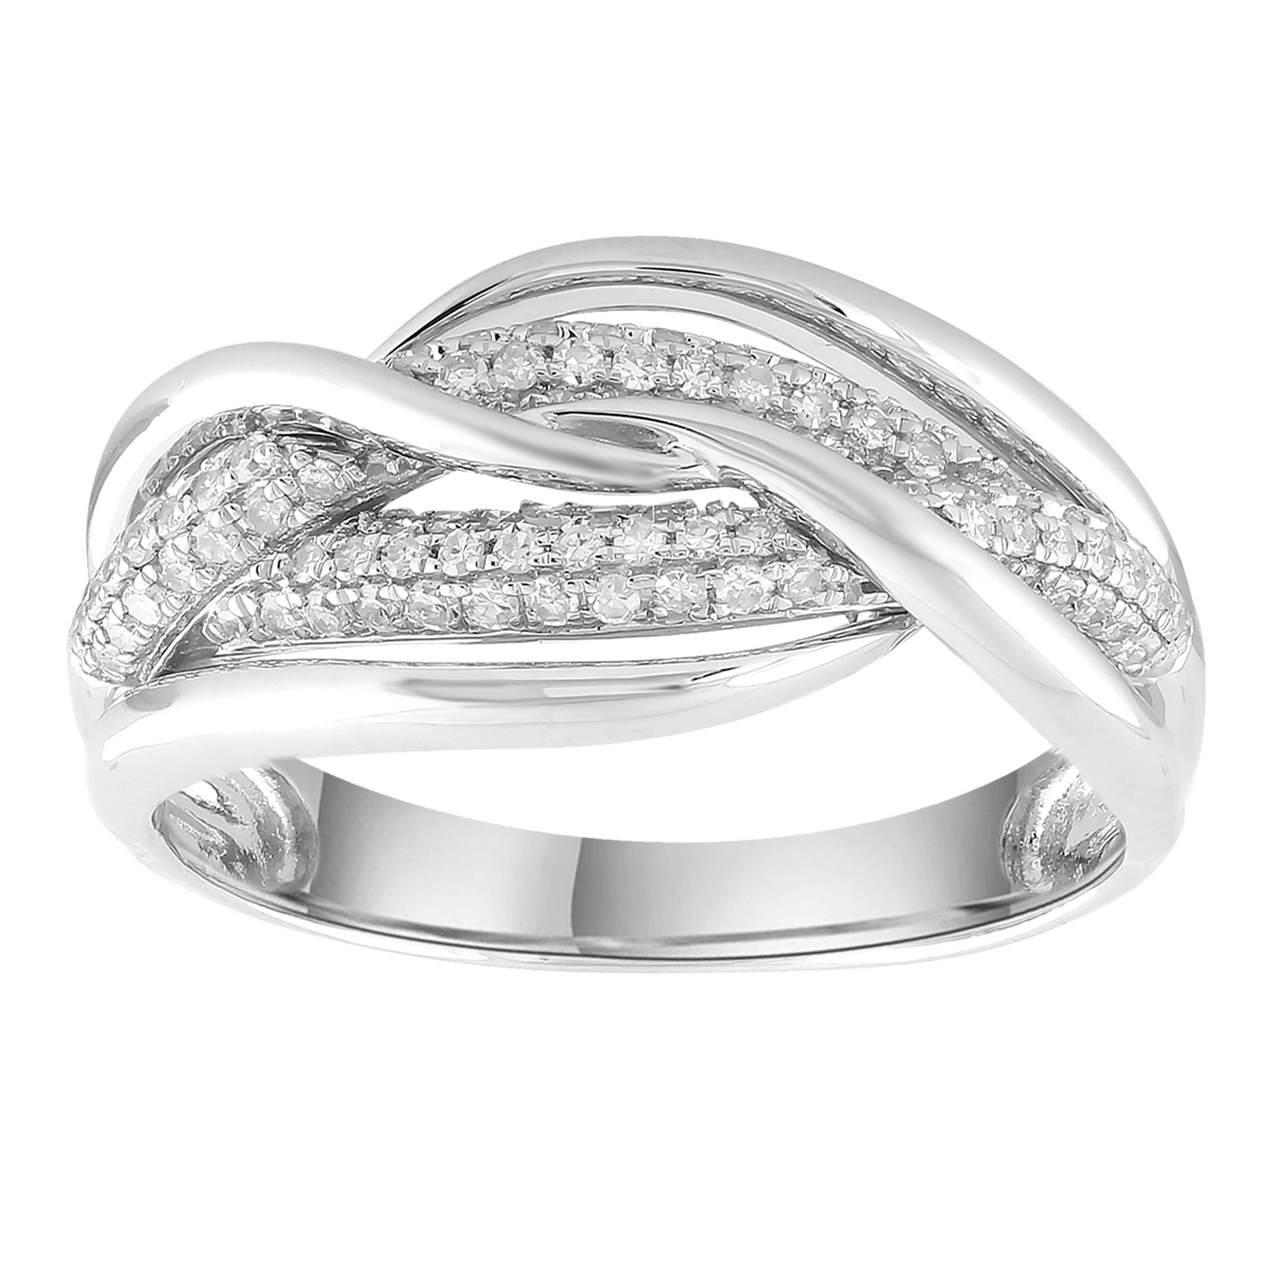 Ice Jewellery Ring with 0.33ct Diamonds in 9K White Gold -  IGR-38853-033-W | Ice Jewellery Australia